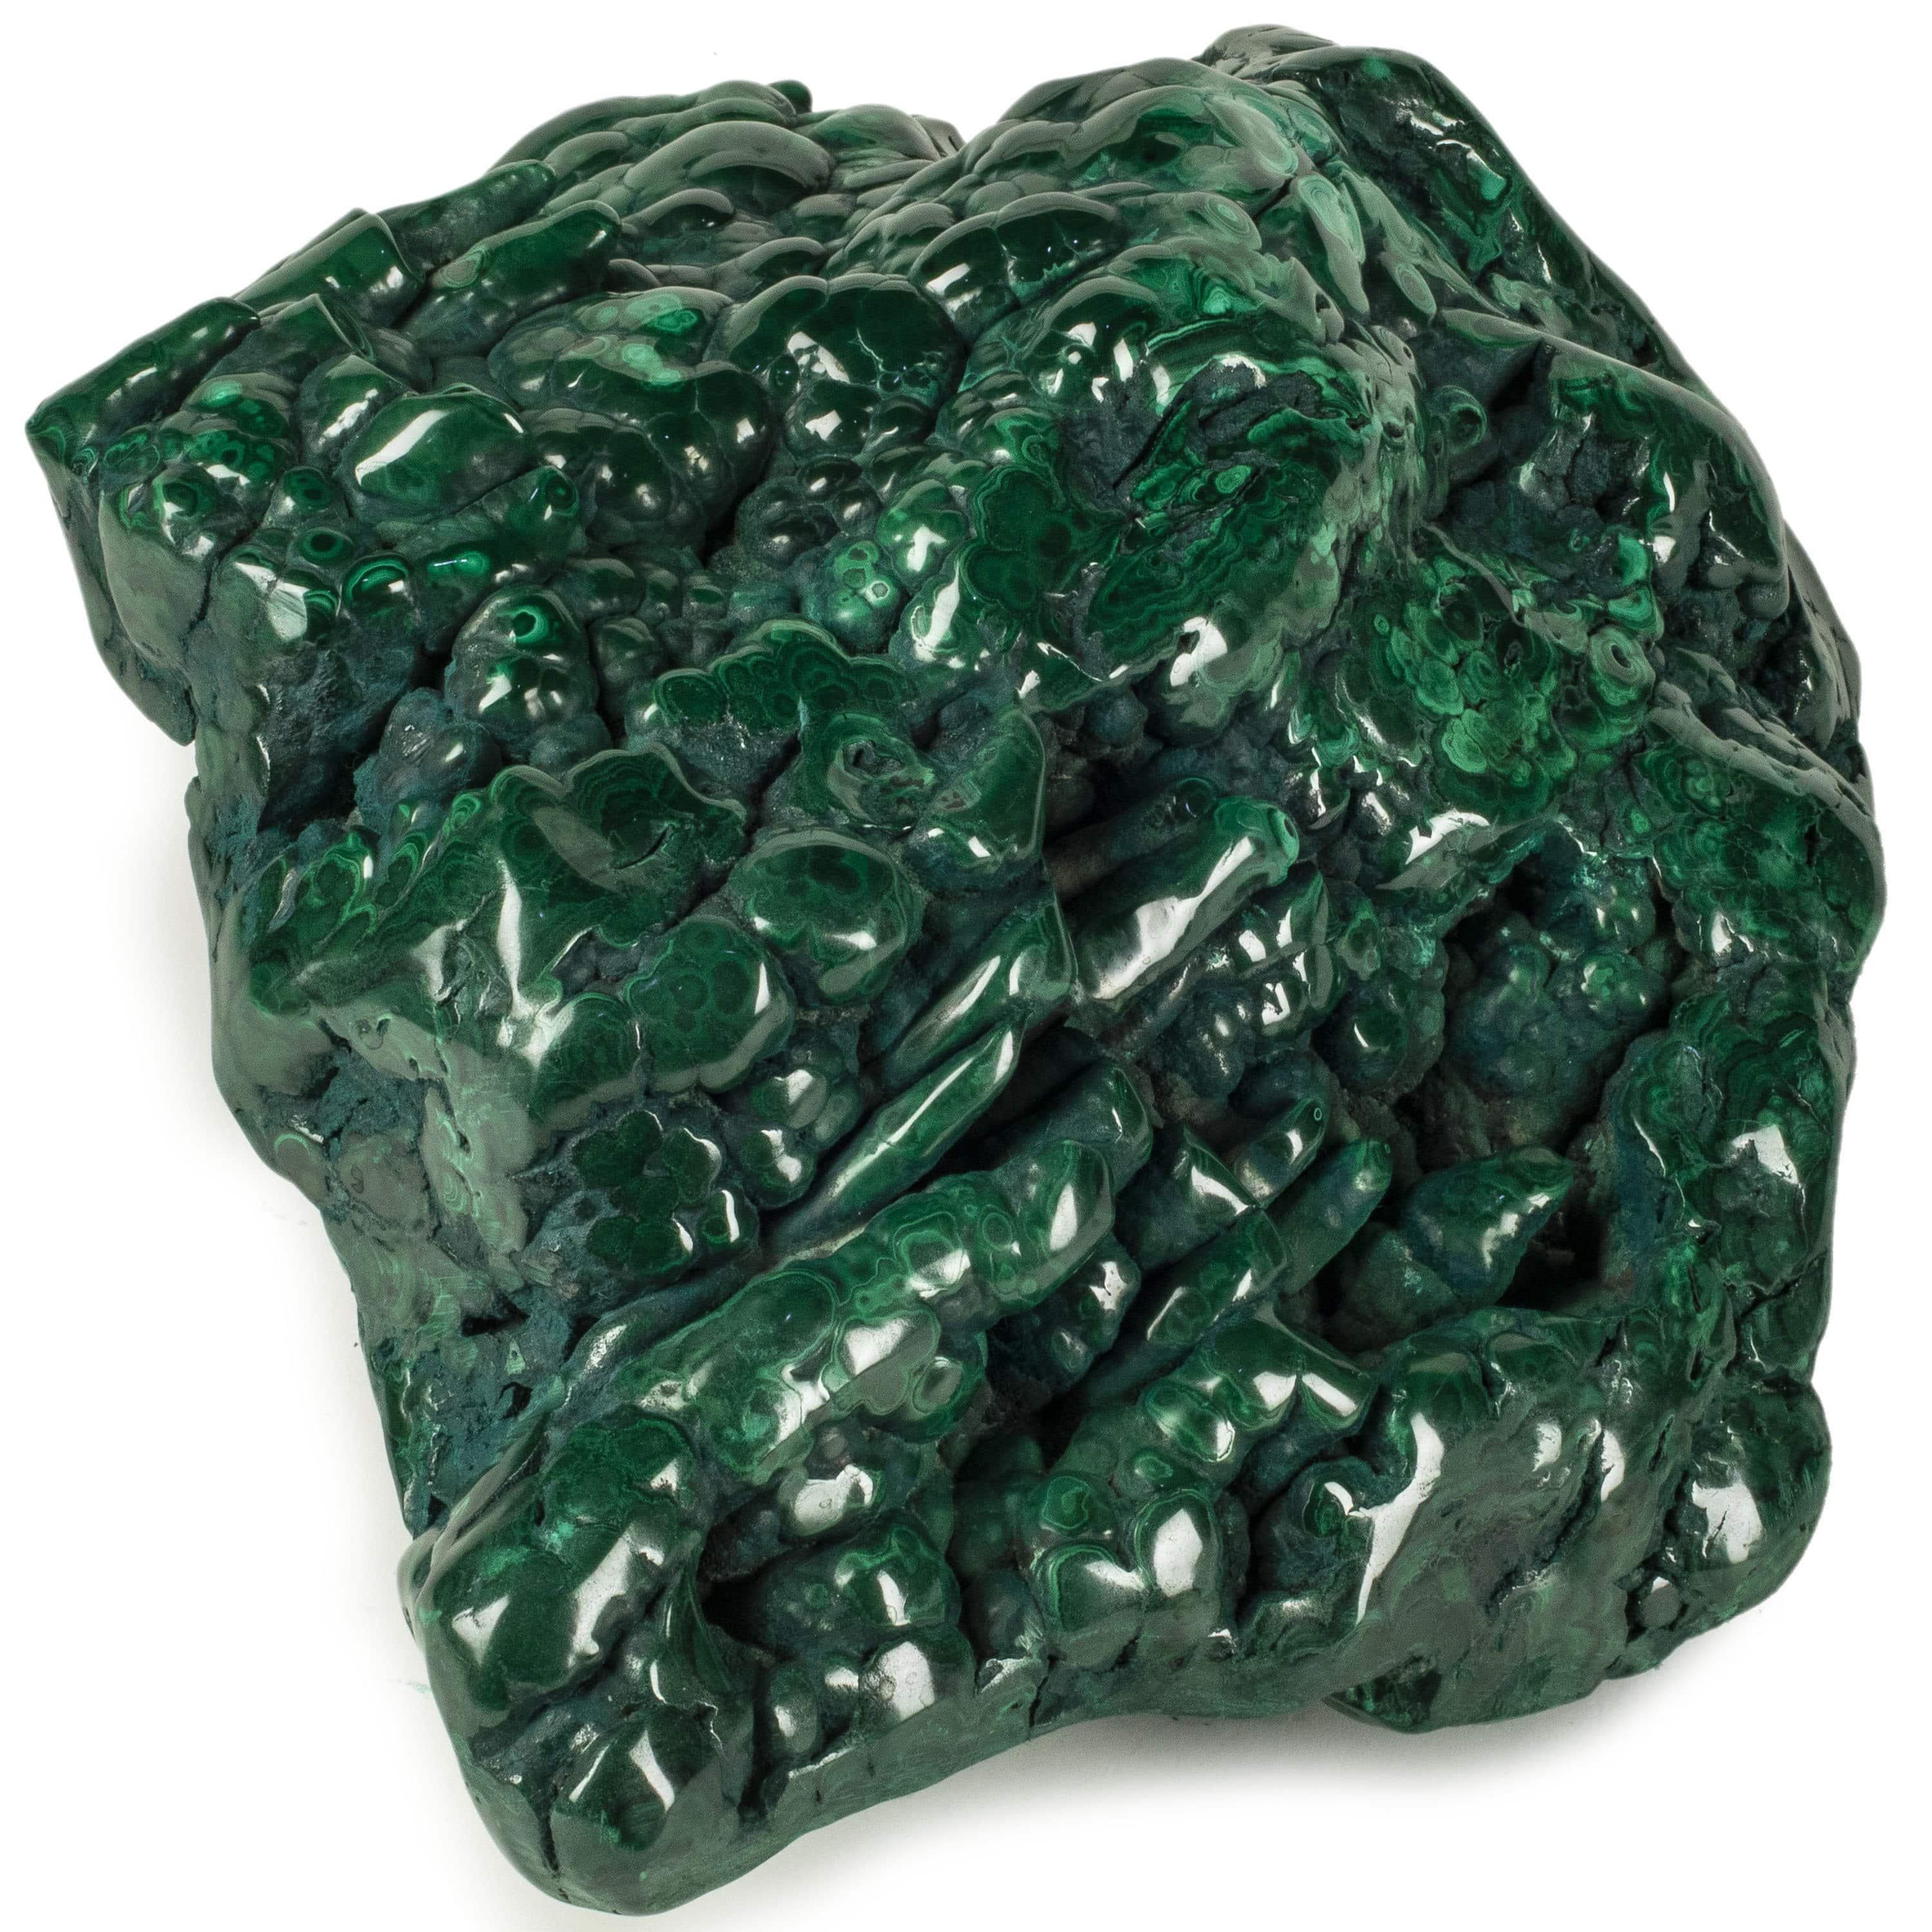 Kalifano Malachite Rare Natural Green Malachite Polished Freeform Specimen from Congo - 15.5 kg / 34.1 lbs MA10000.001